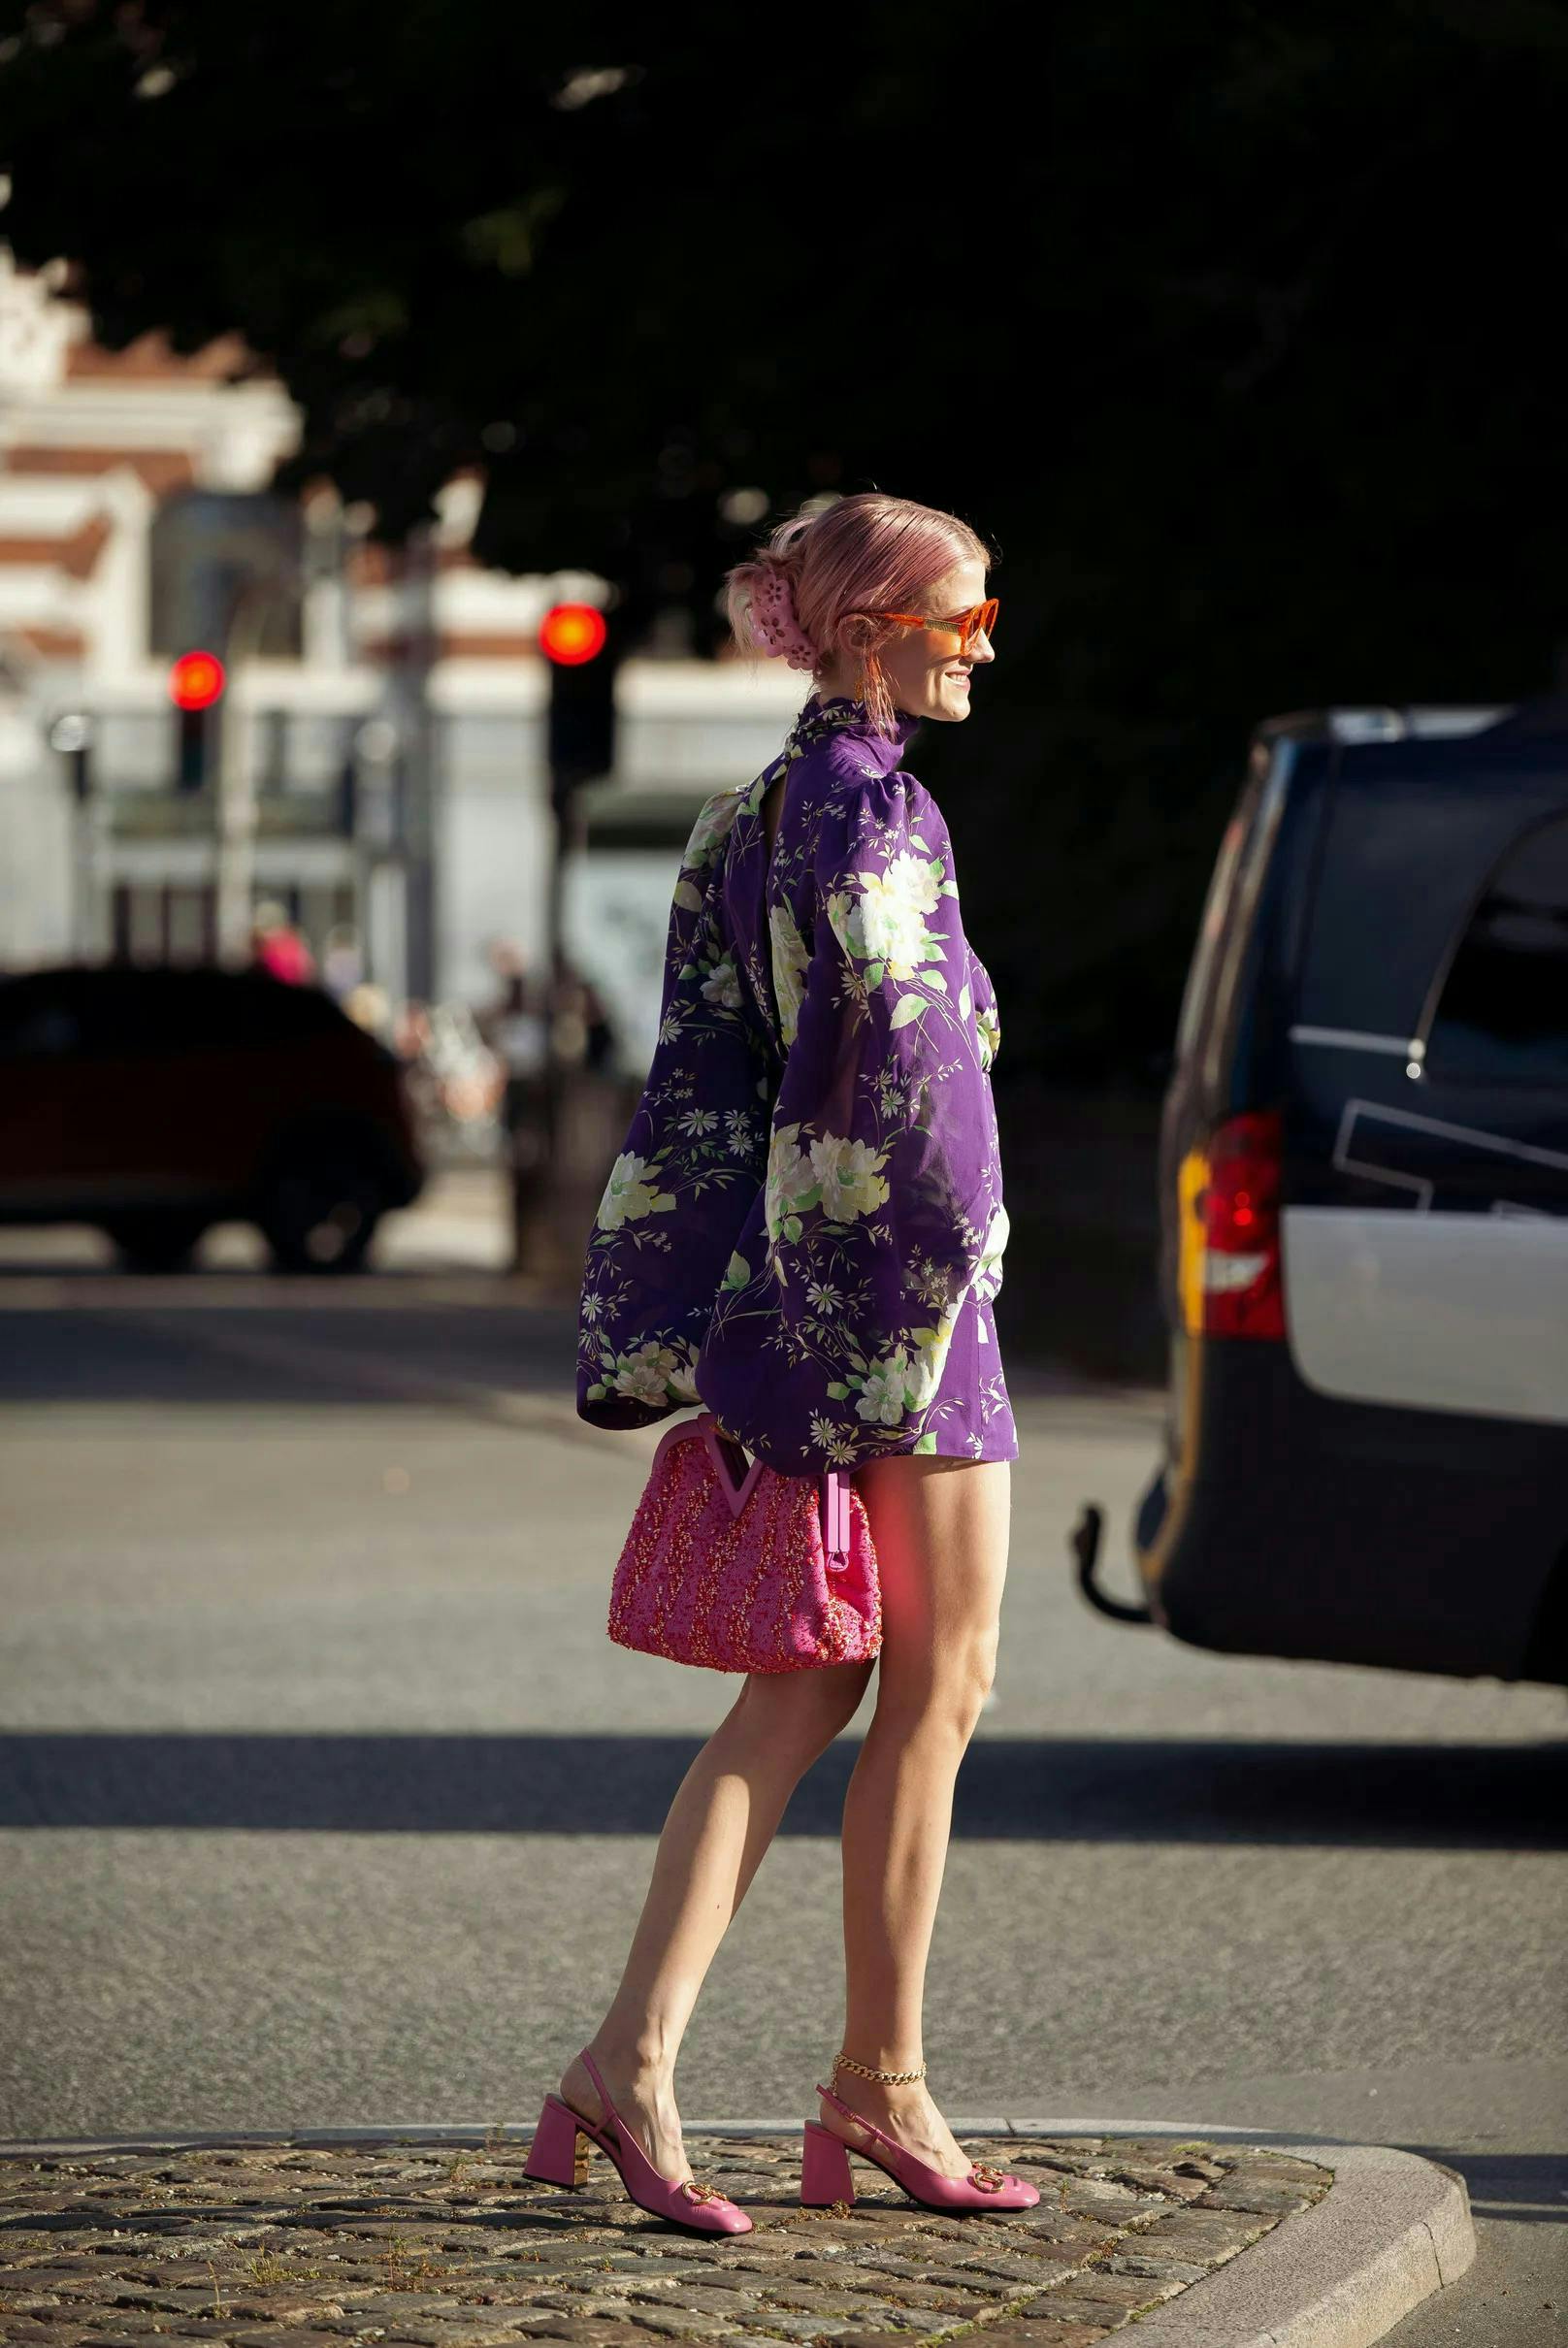 clothing person car transportation vehicle female shorts tire tarmac skirt